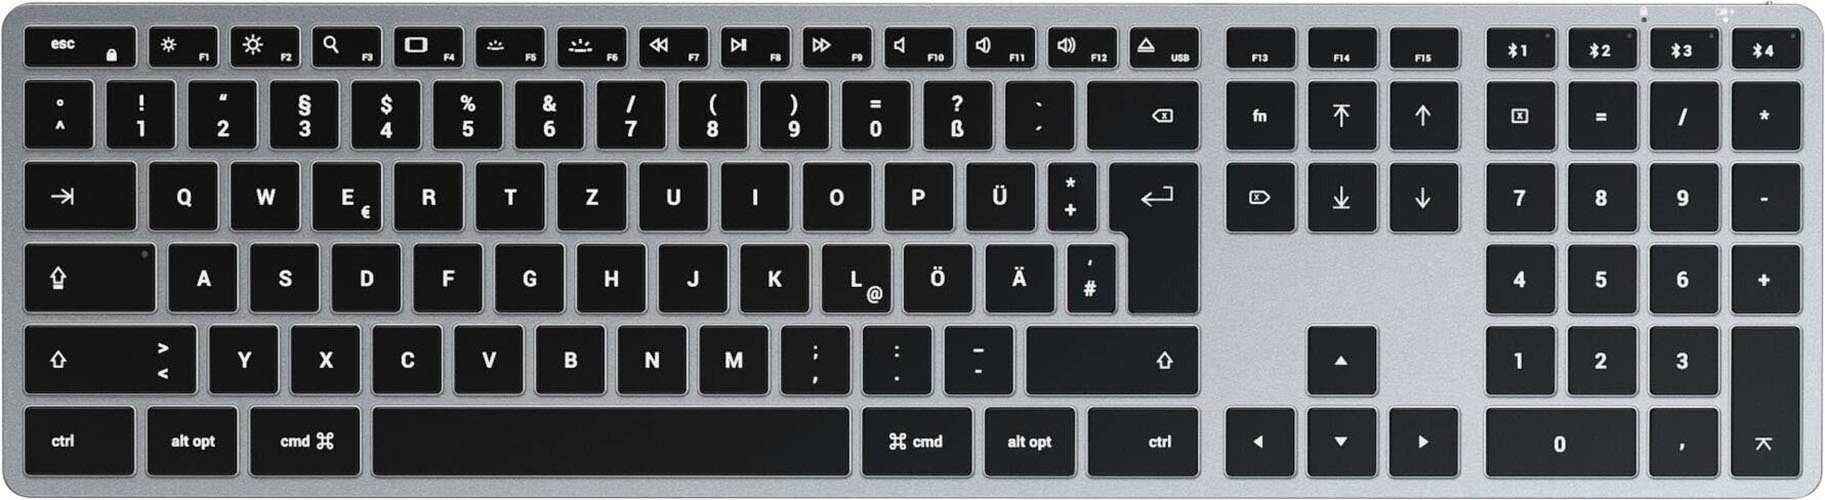 Satechi Slim X3 Bluetooth Keyboard-DE (German) Tastatur